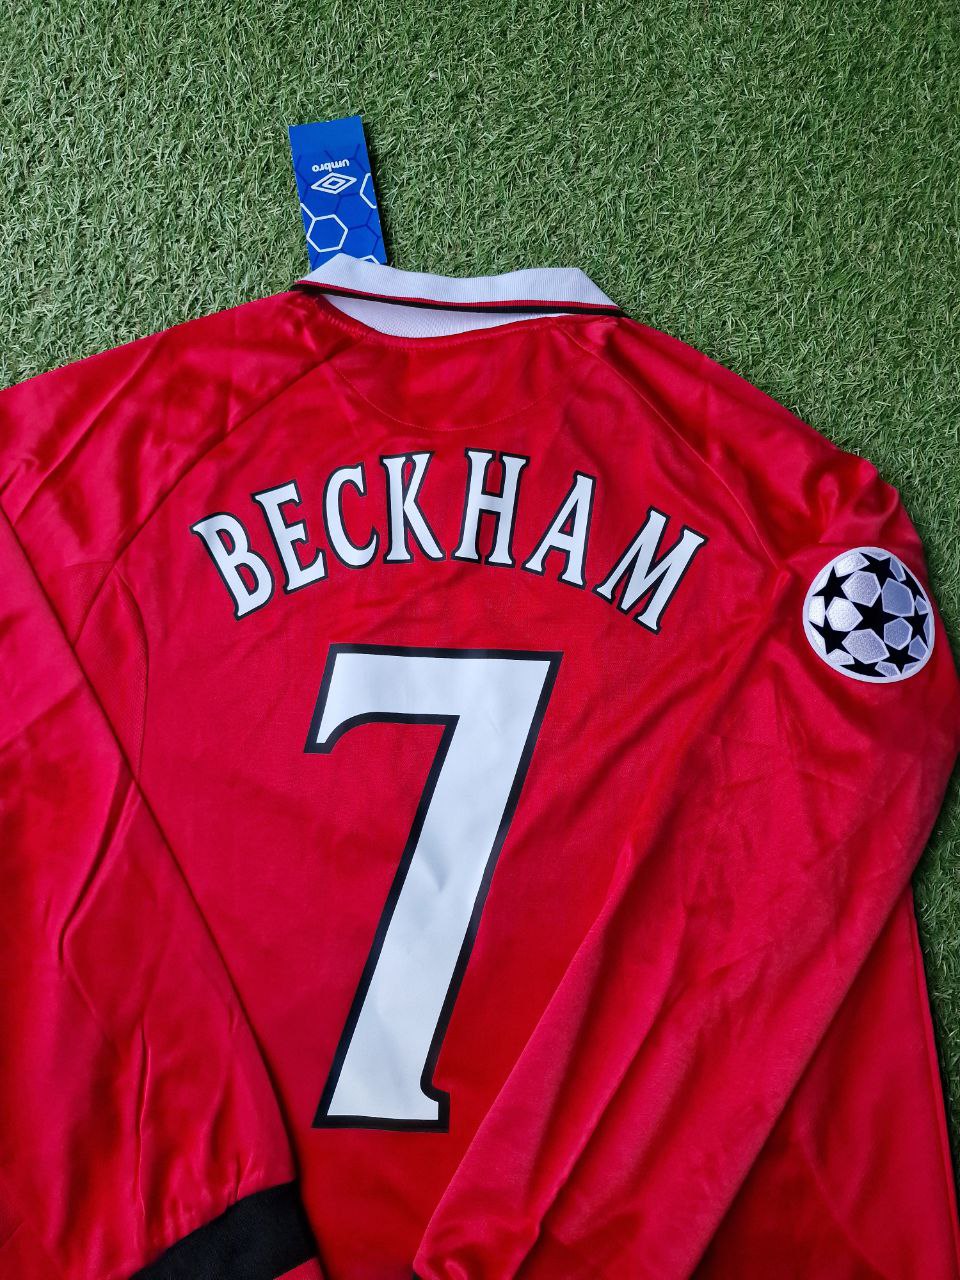 David Beckham Manchester United Red Retro Football Jersey